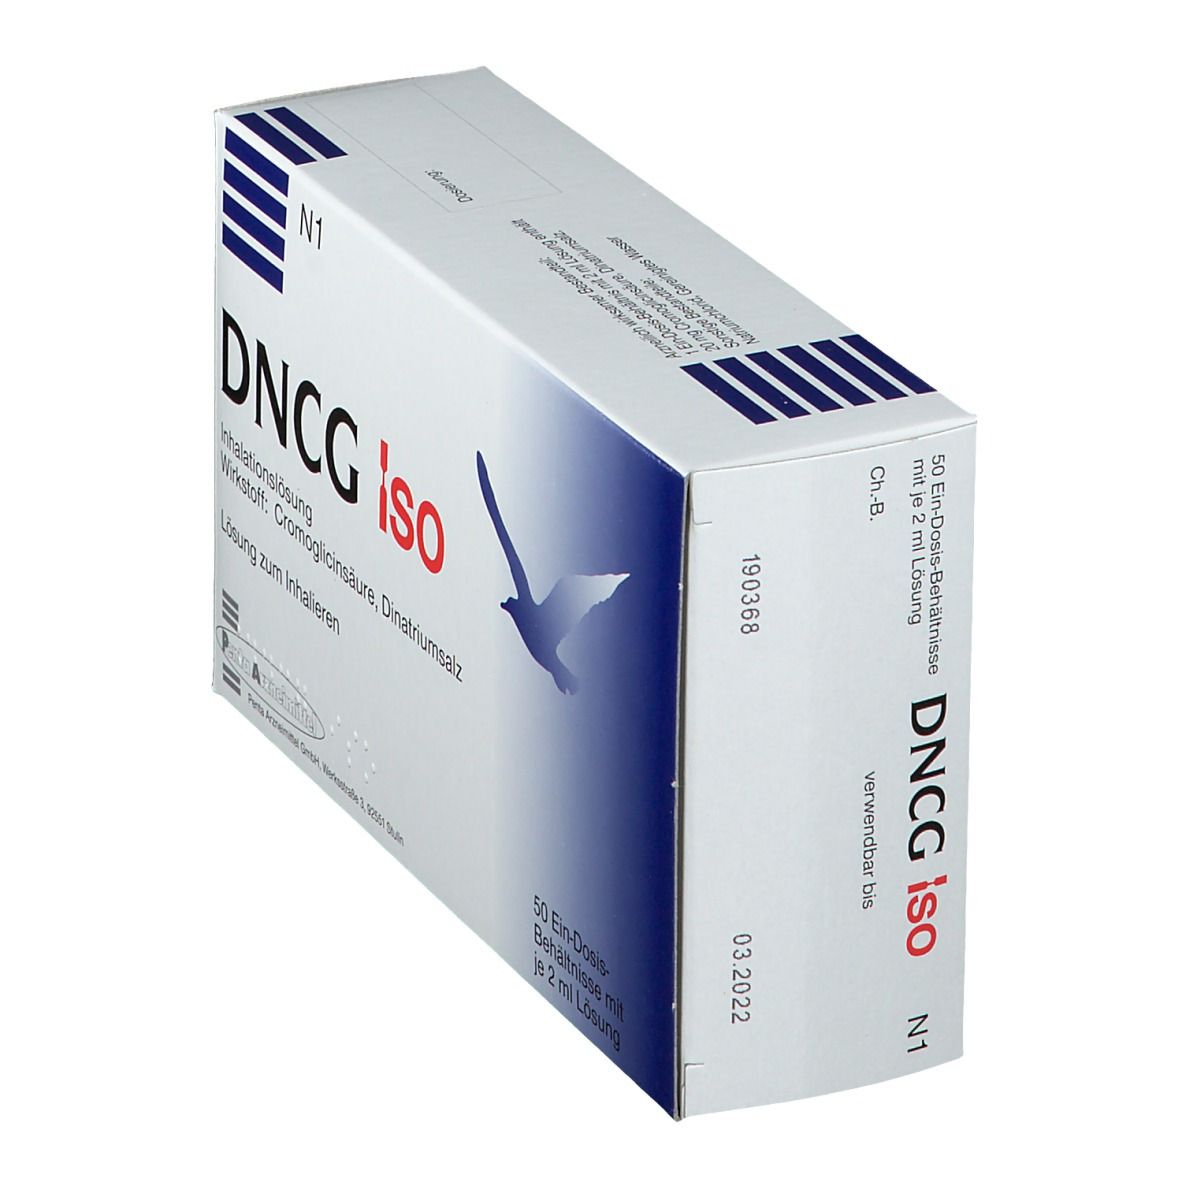 DNCG ISO Inhalationslösung